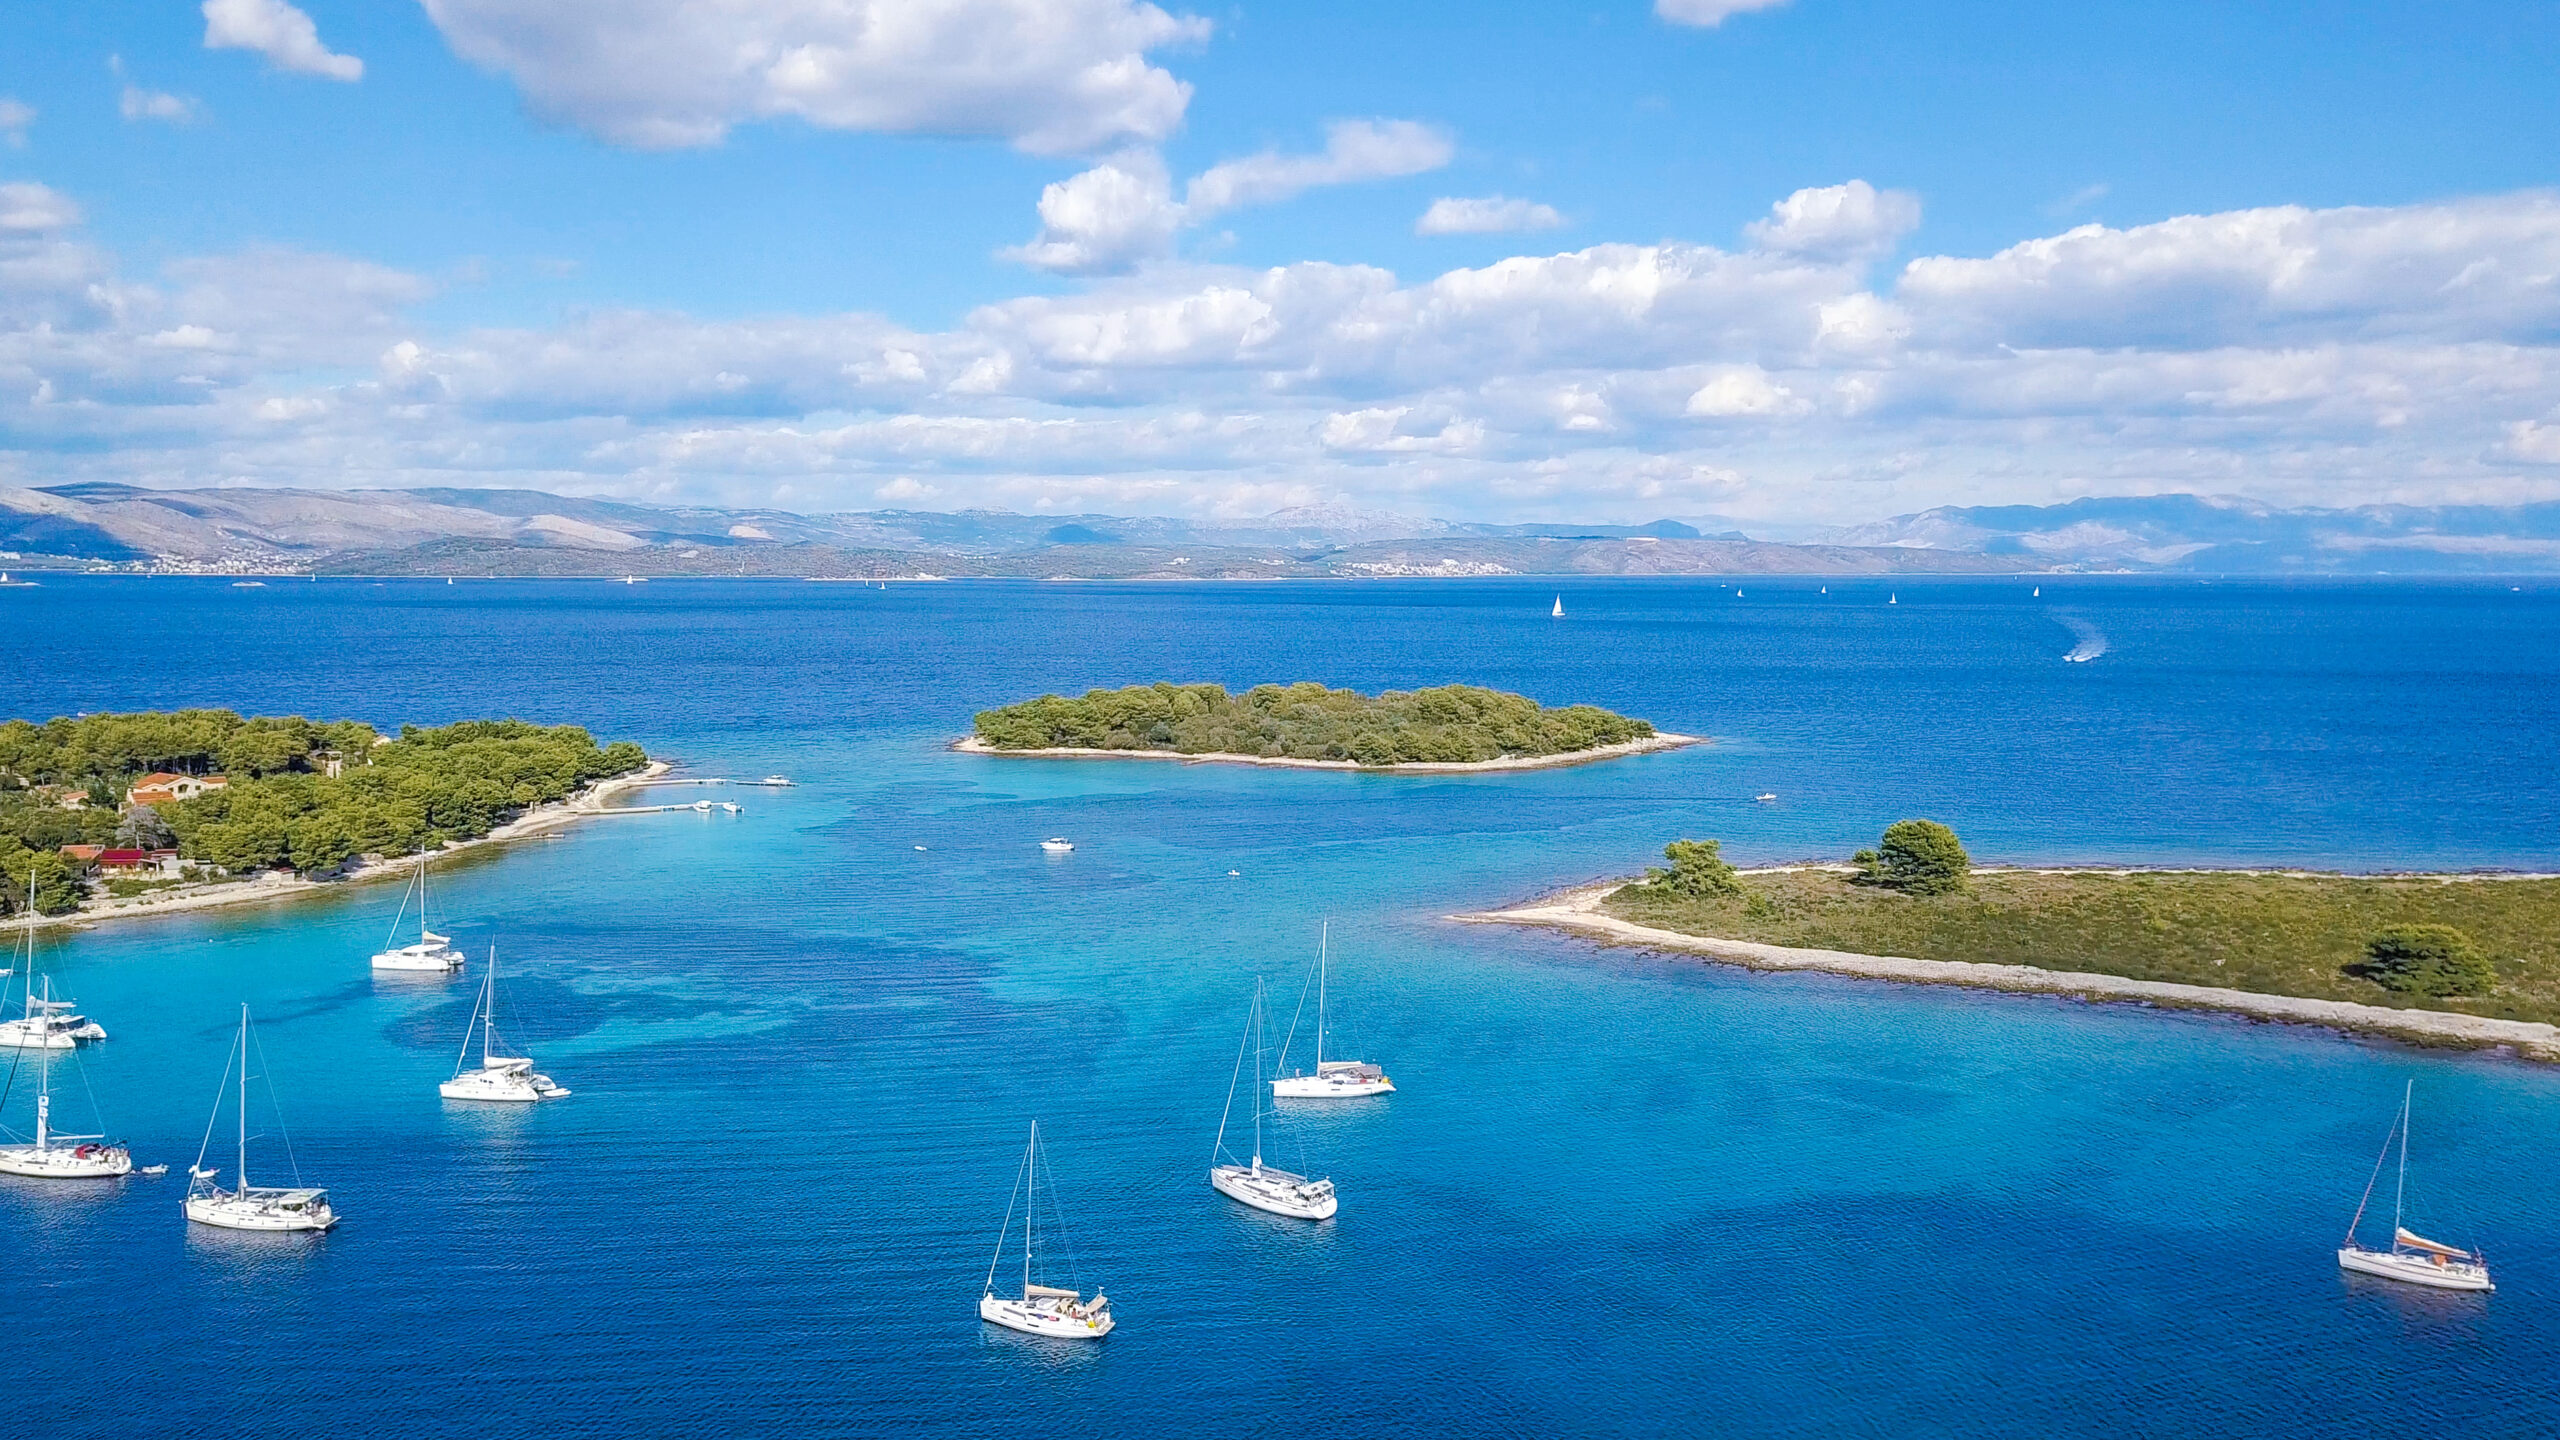 Aerial image of Croatia southern islands